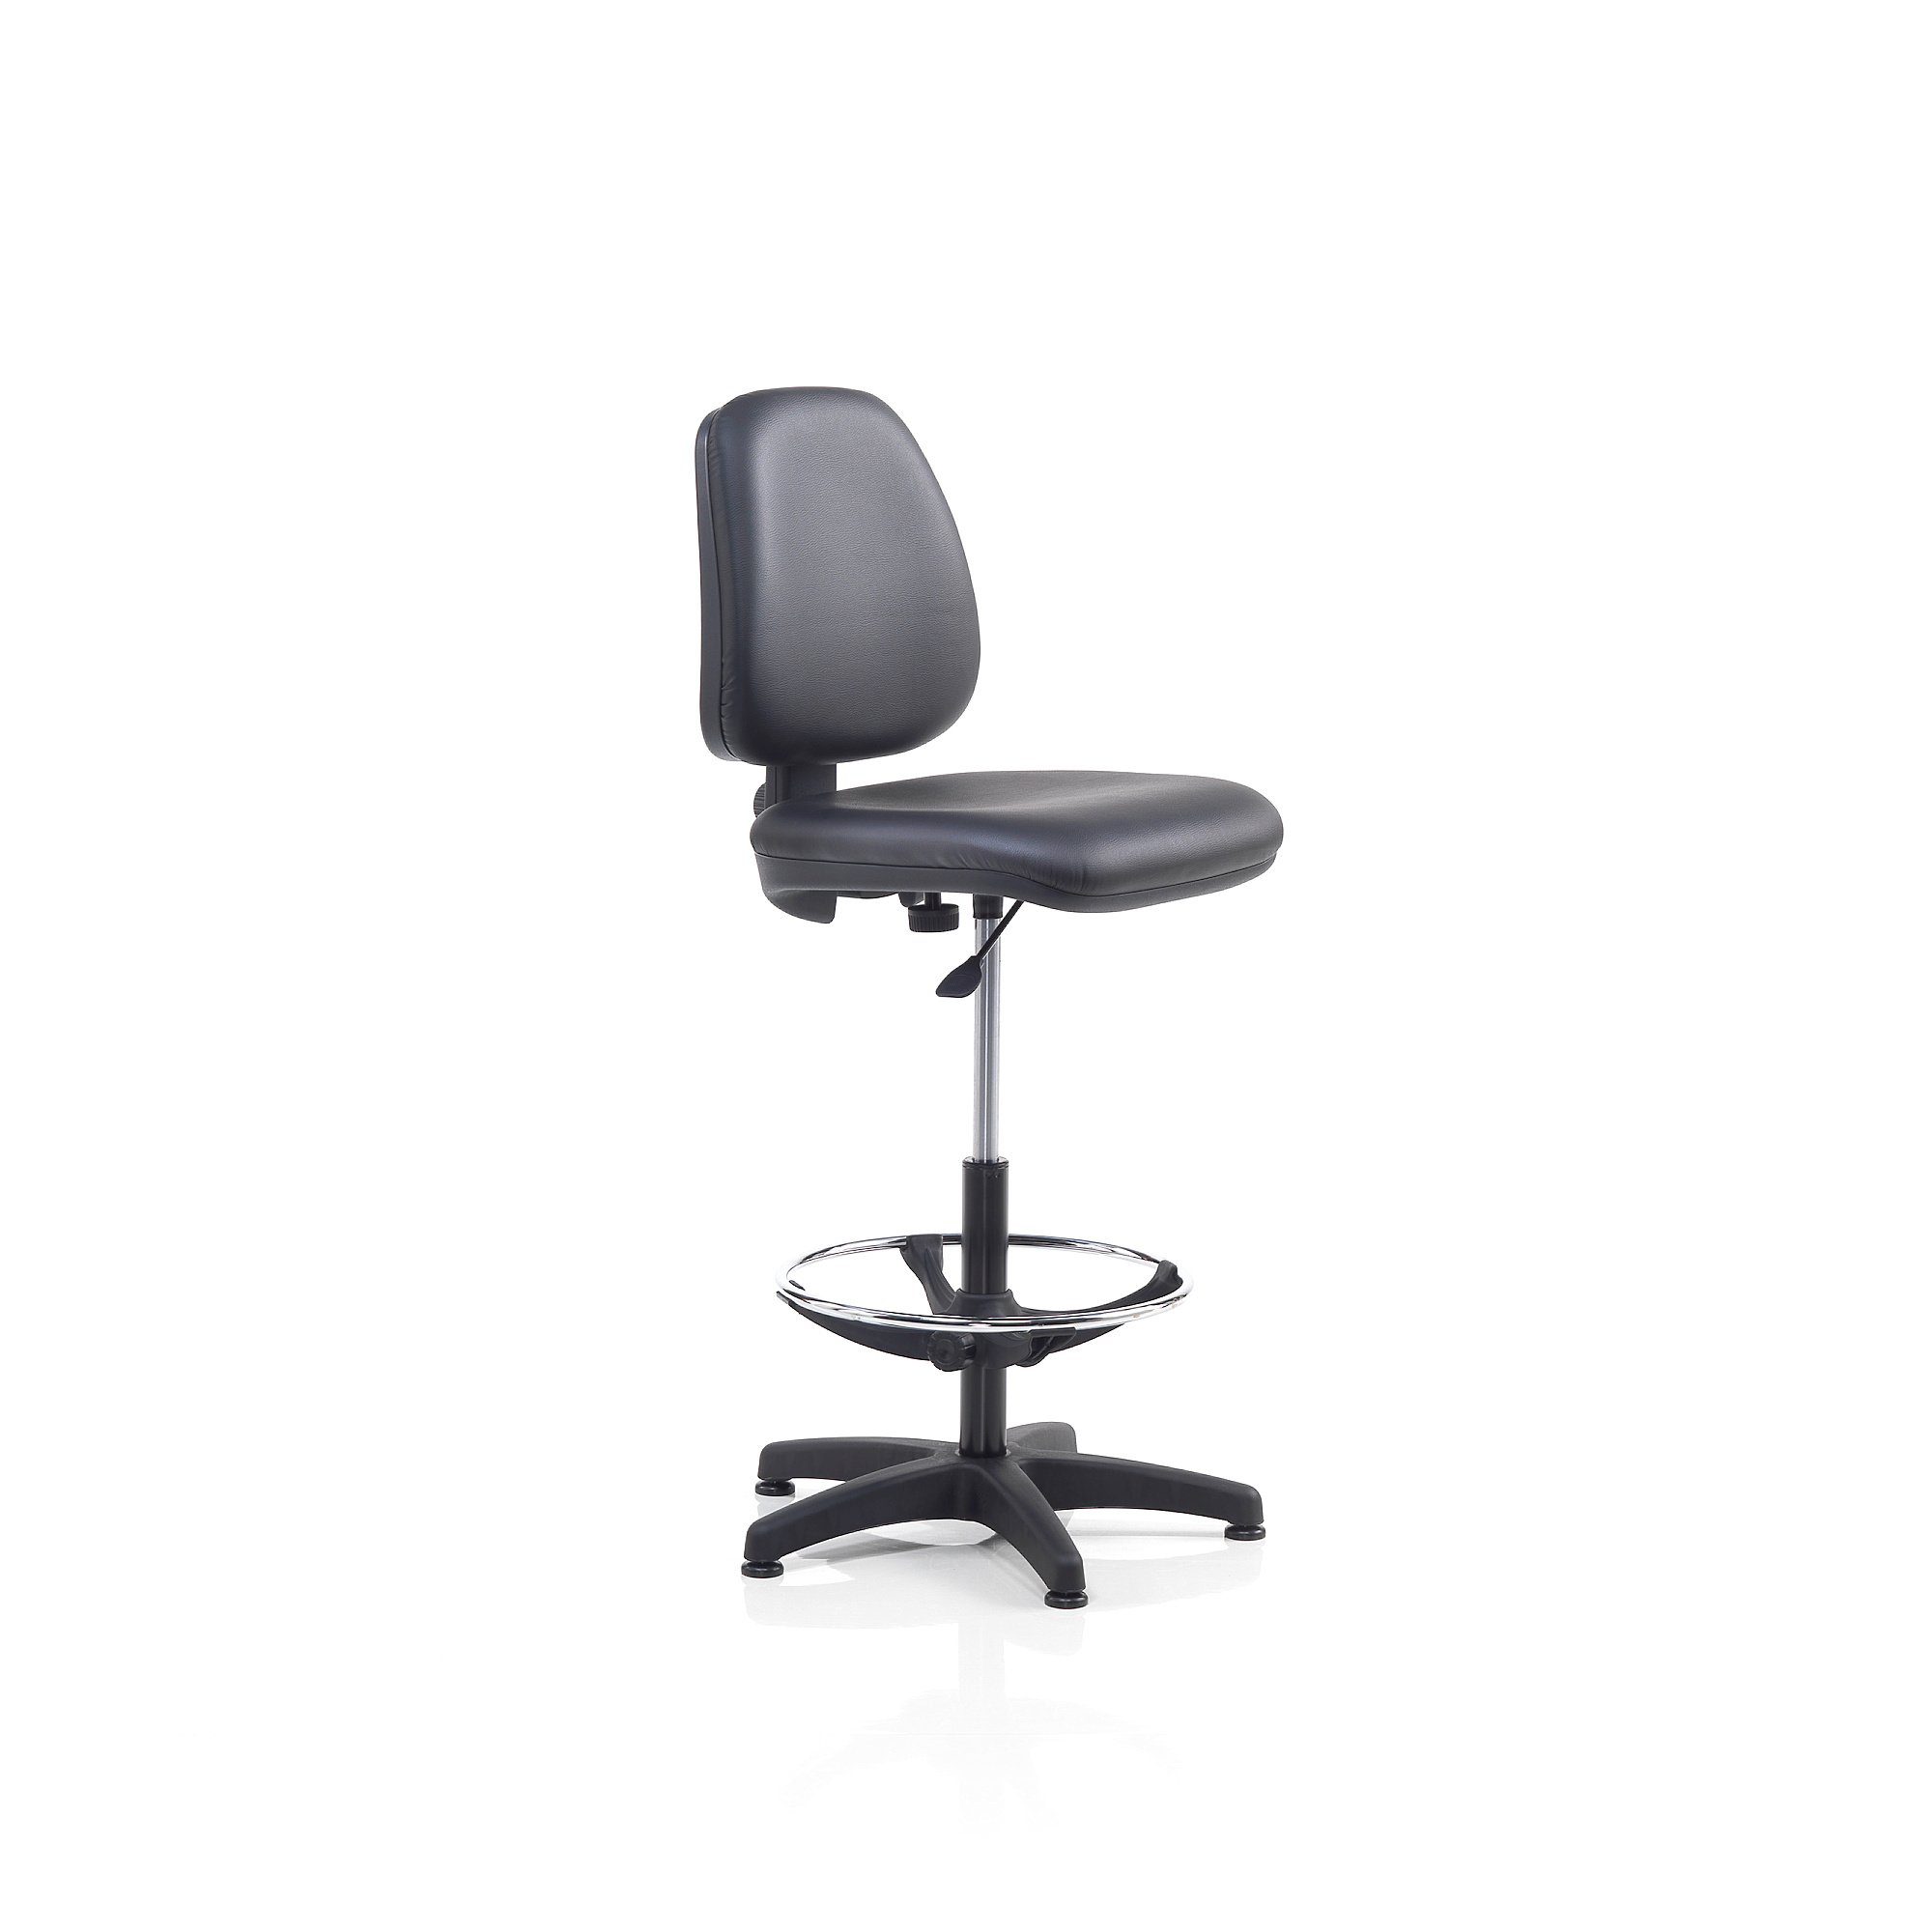 E-shop Pracovná dielenská stolička s opierkou nôh DARWIN, výška 635-815 mm, čierna